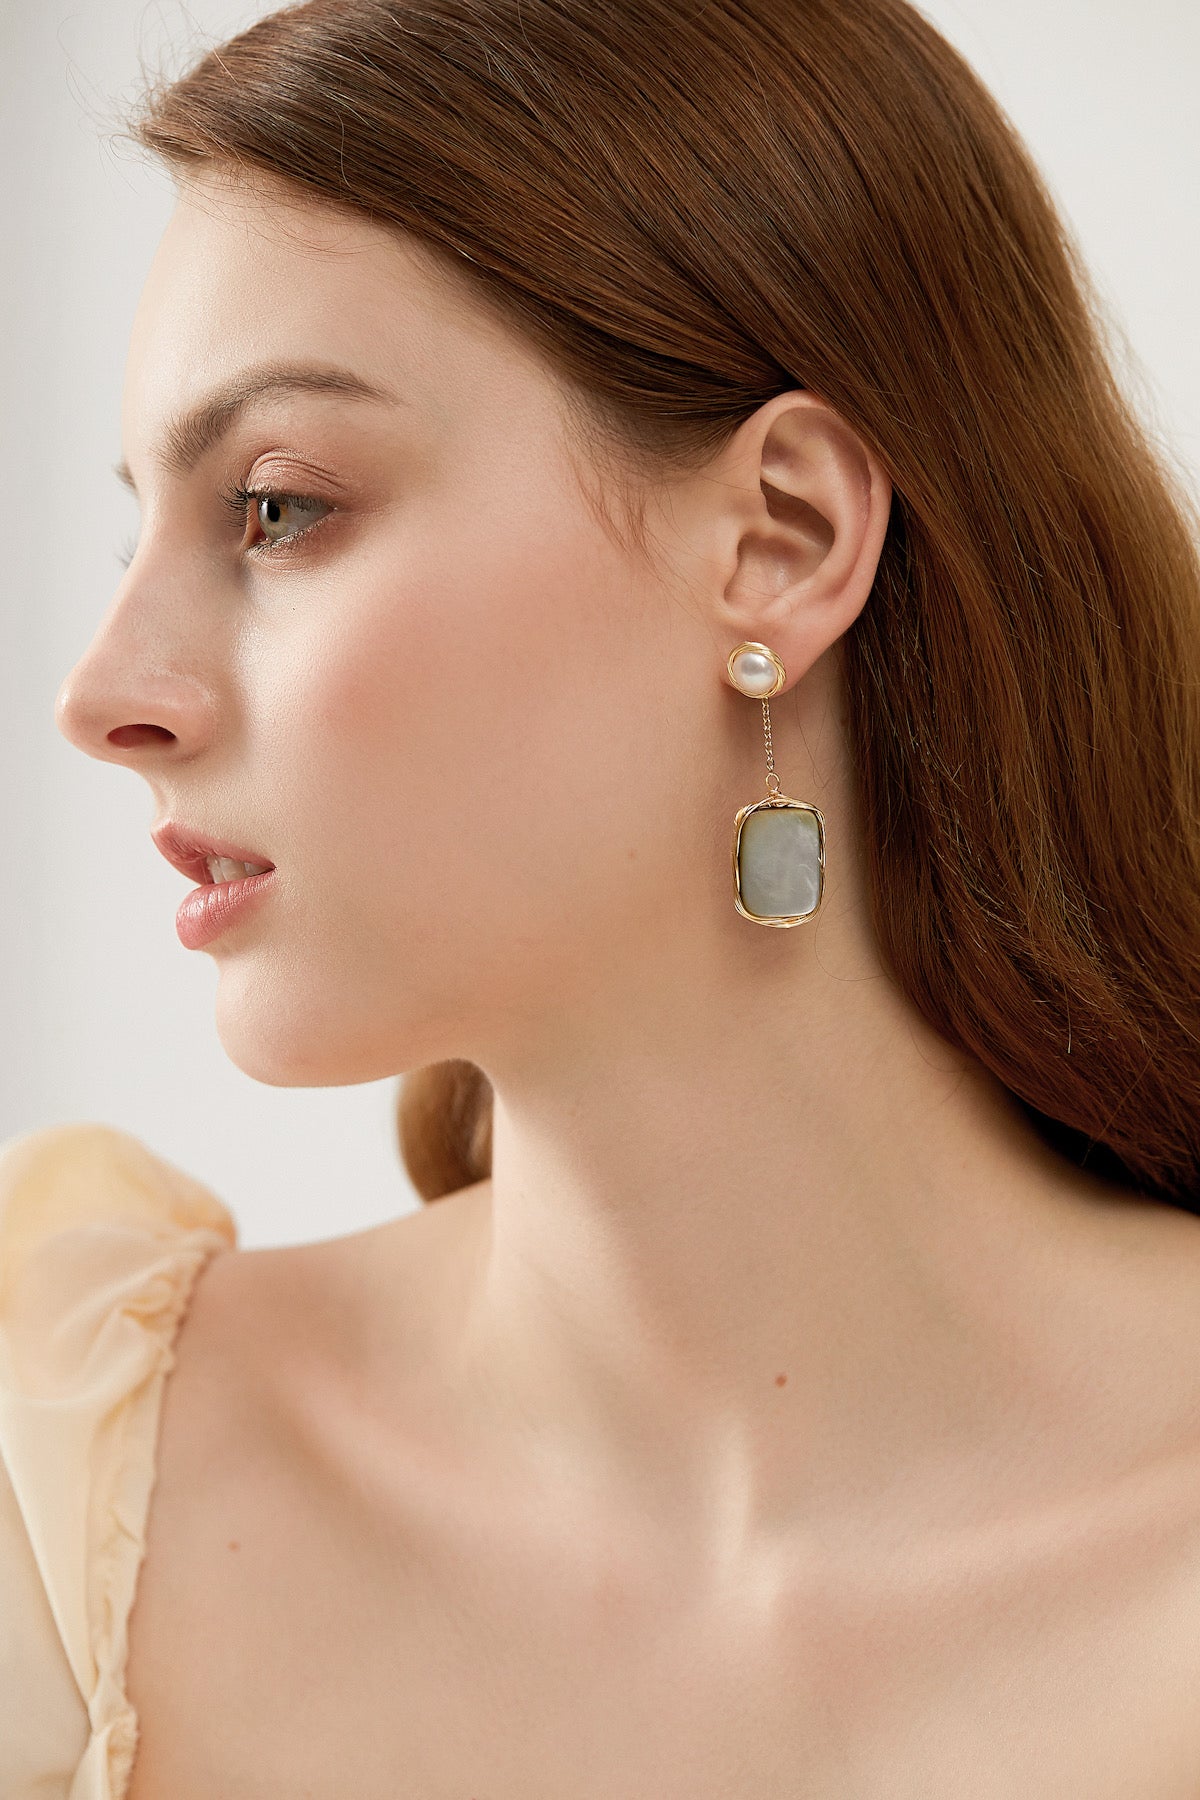 SKYE San Francisco Shop SF Chic Modern Elegant Classy Women Jewelry French Parisian Minimalist Sacha 18K Gold Pearl Drop Earrings 5